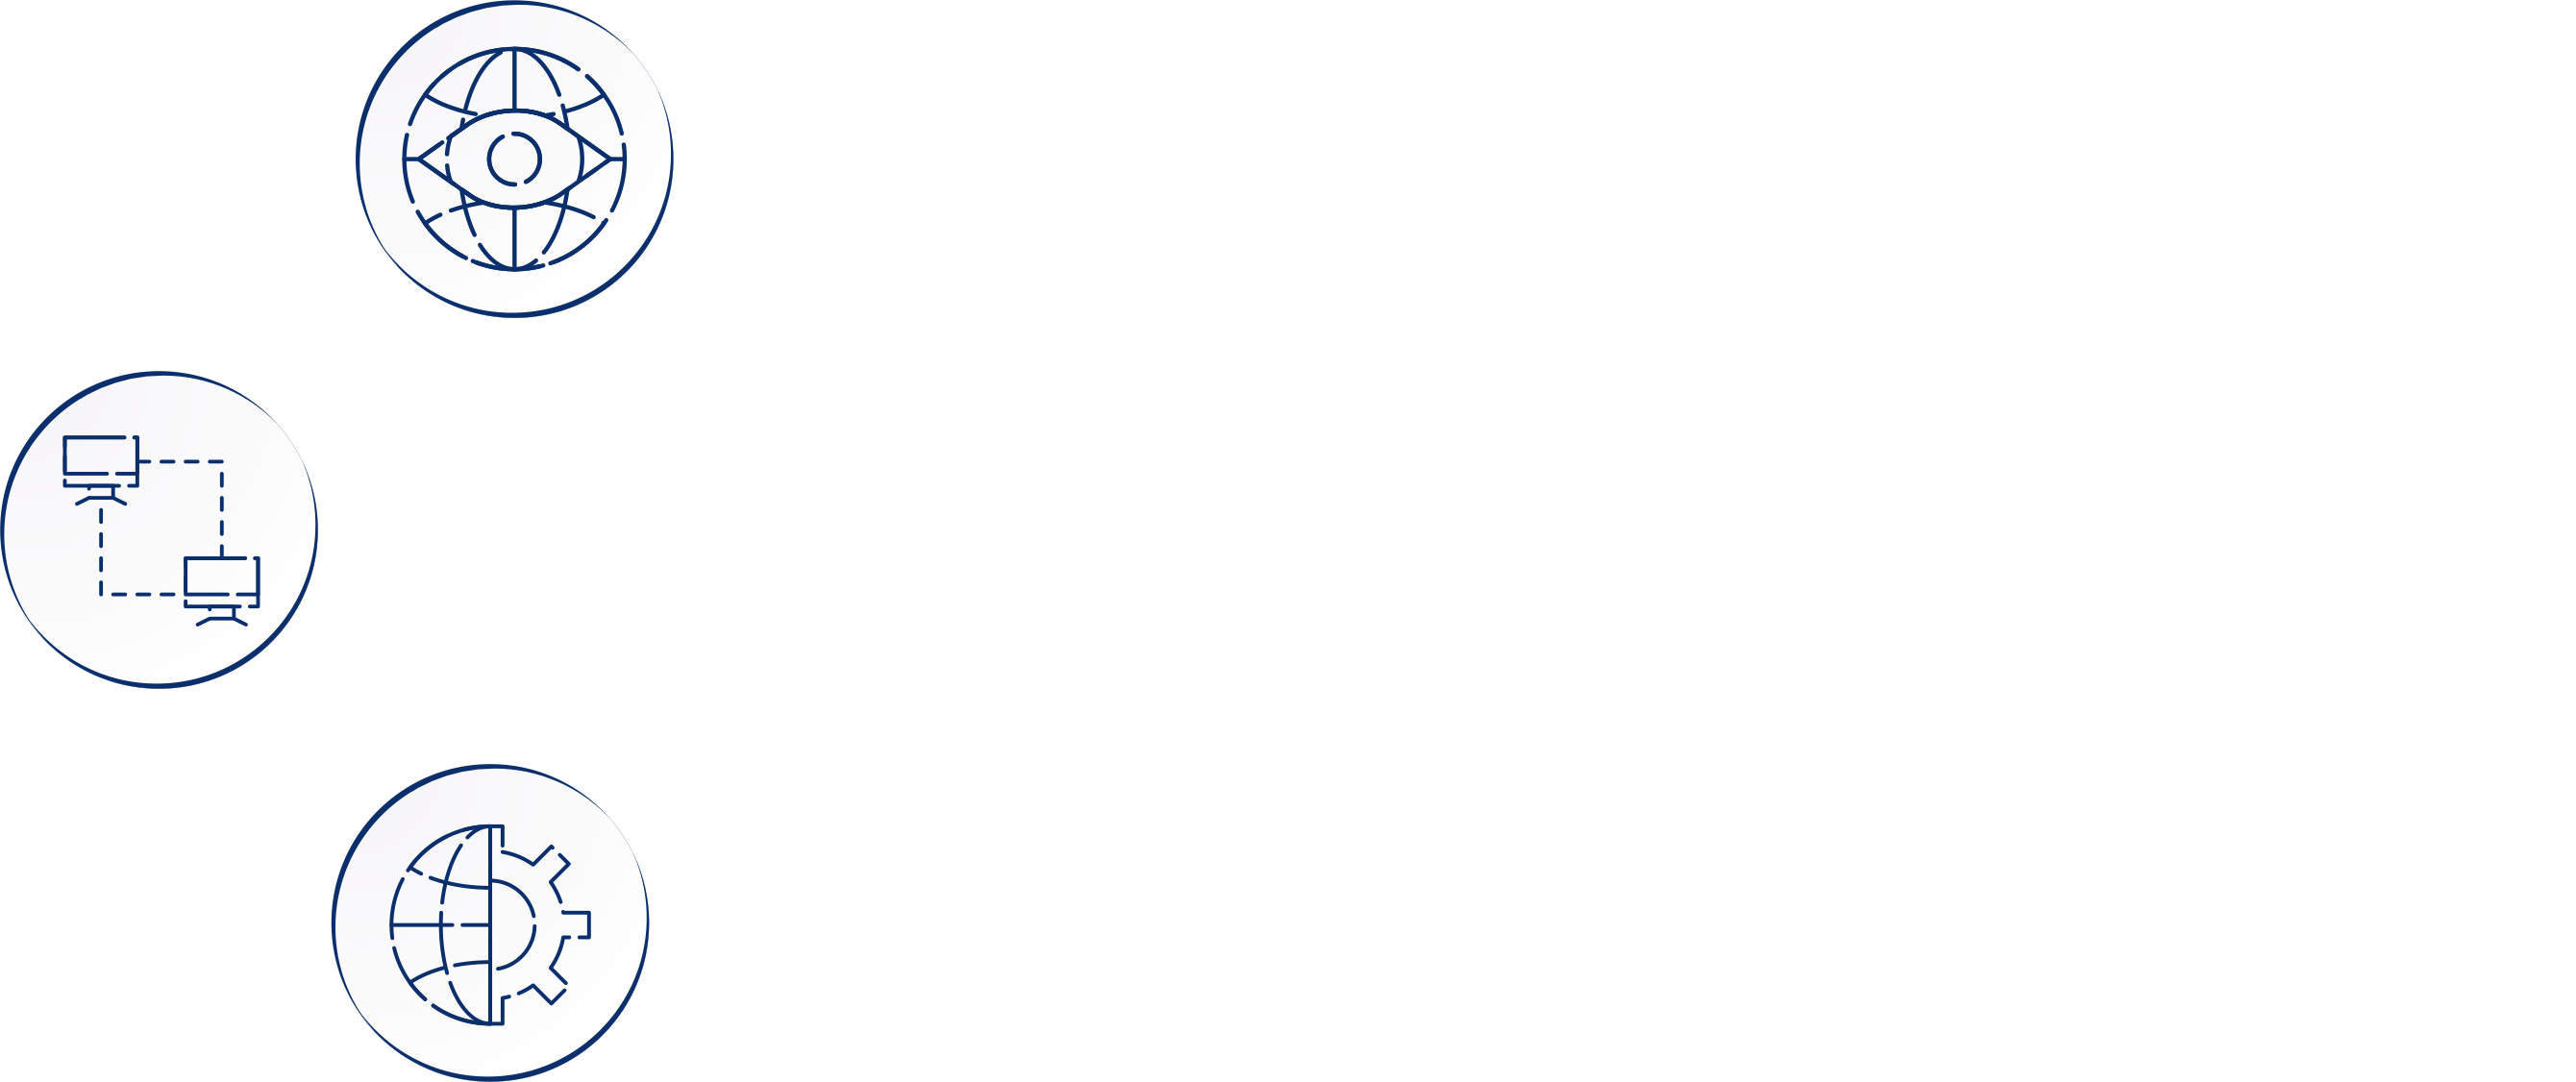 shared services summmit 2020 logo